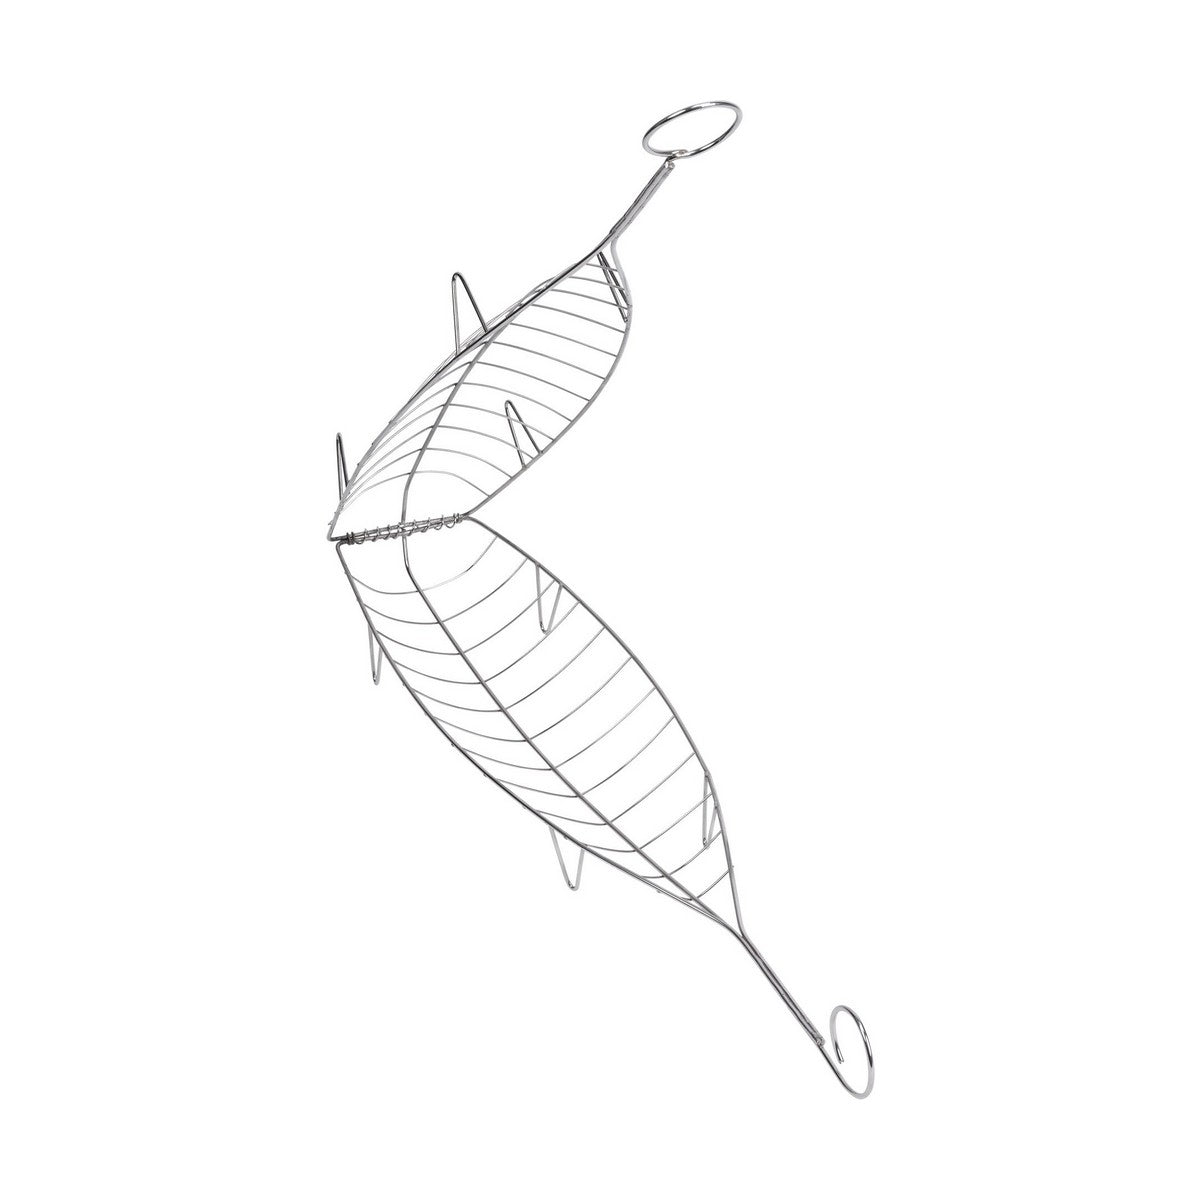 Grillgrill fyrir fisk sauvic (13,5 x 54 cm)